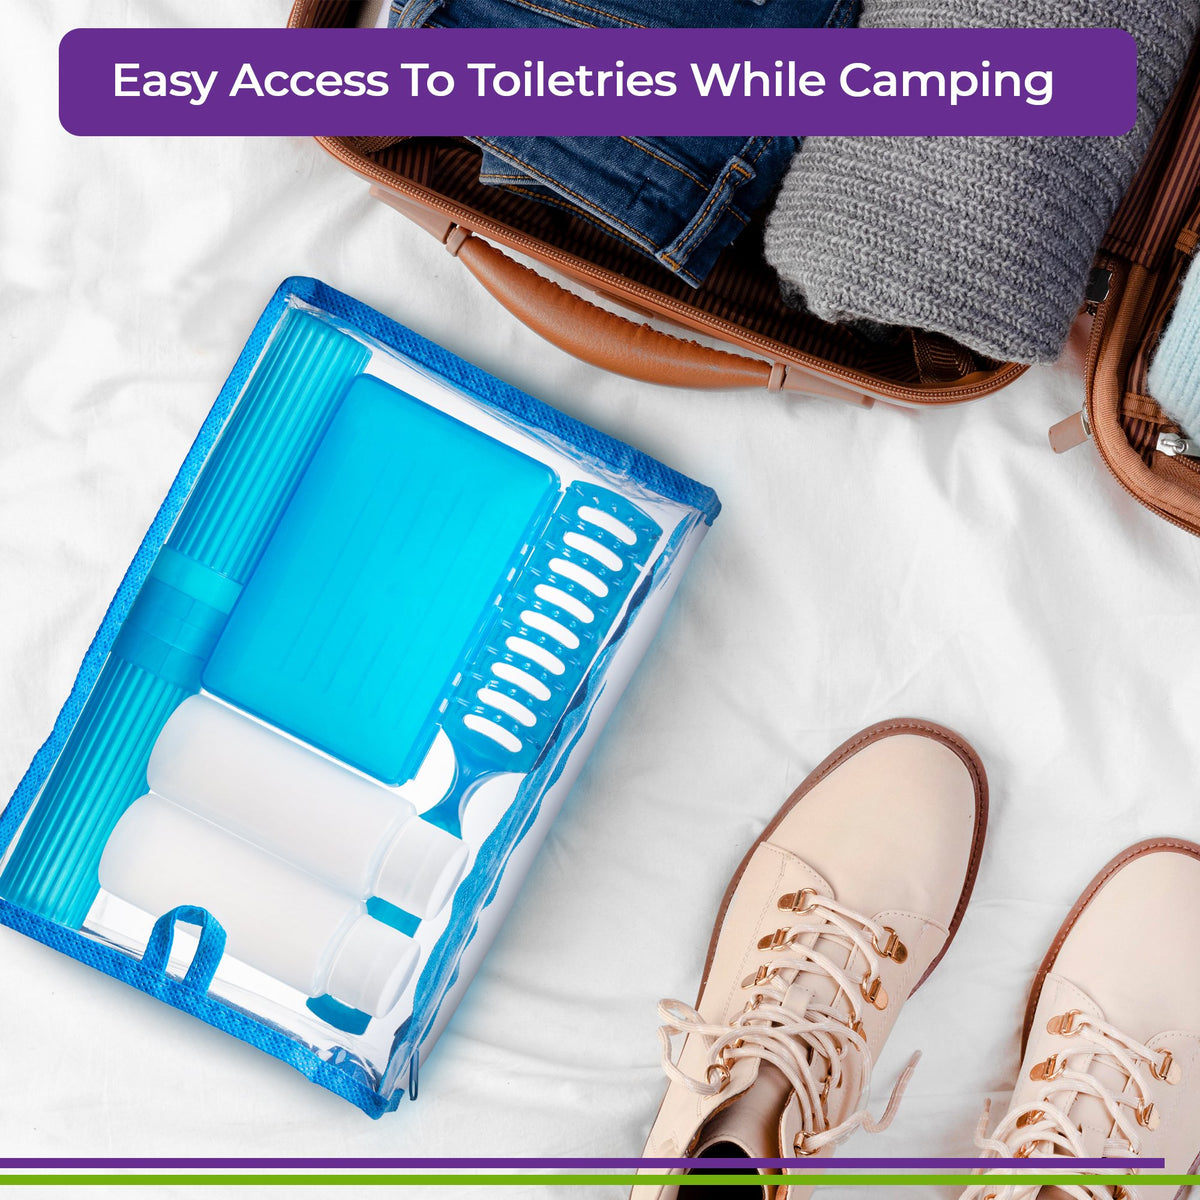 Mars Wellness Camp Kit - Travel Toiletry Kit w/ Plastic Carry Bag, Toothbrush Holder, Shampoo Bottle - Travel Accessories for Airplane, Camping, & More - Travel Kit for Women, Men & Kids